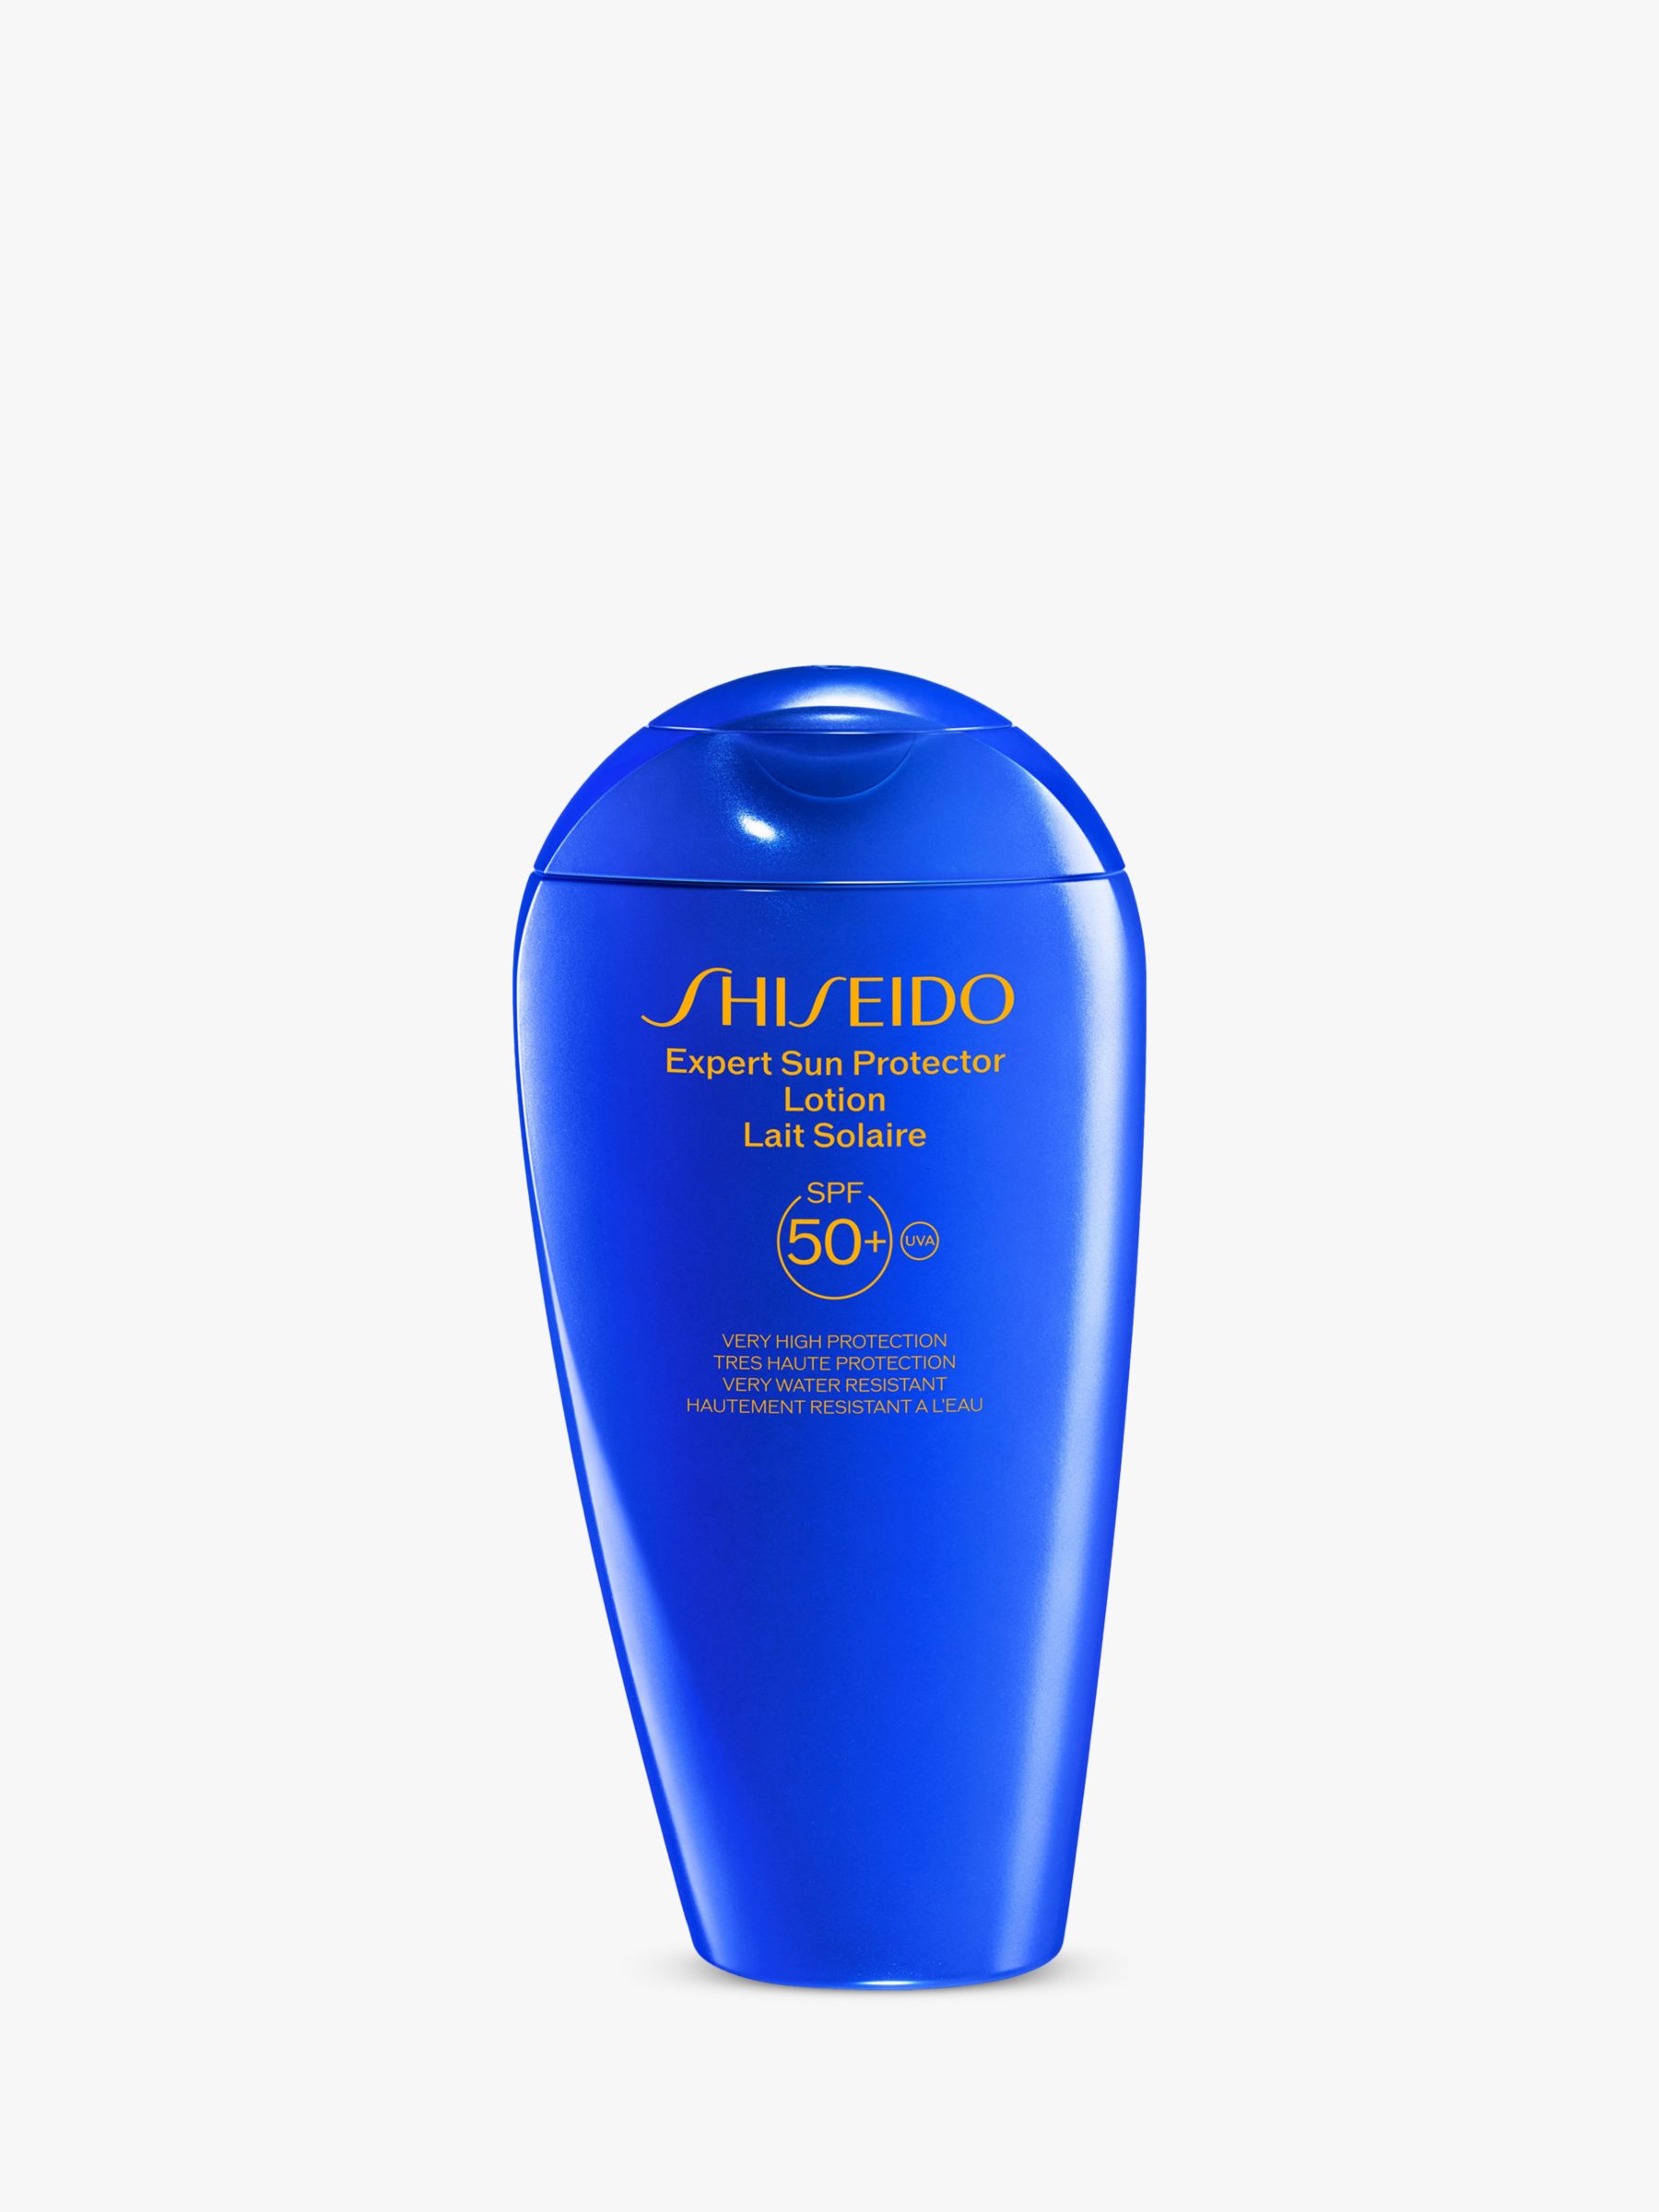 Shiseido Expert Sun Protector Lotion SPF 50+, 300ml